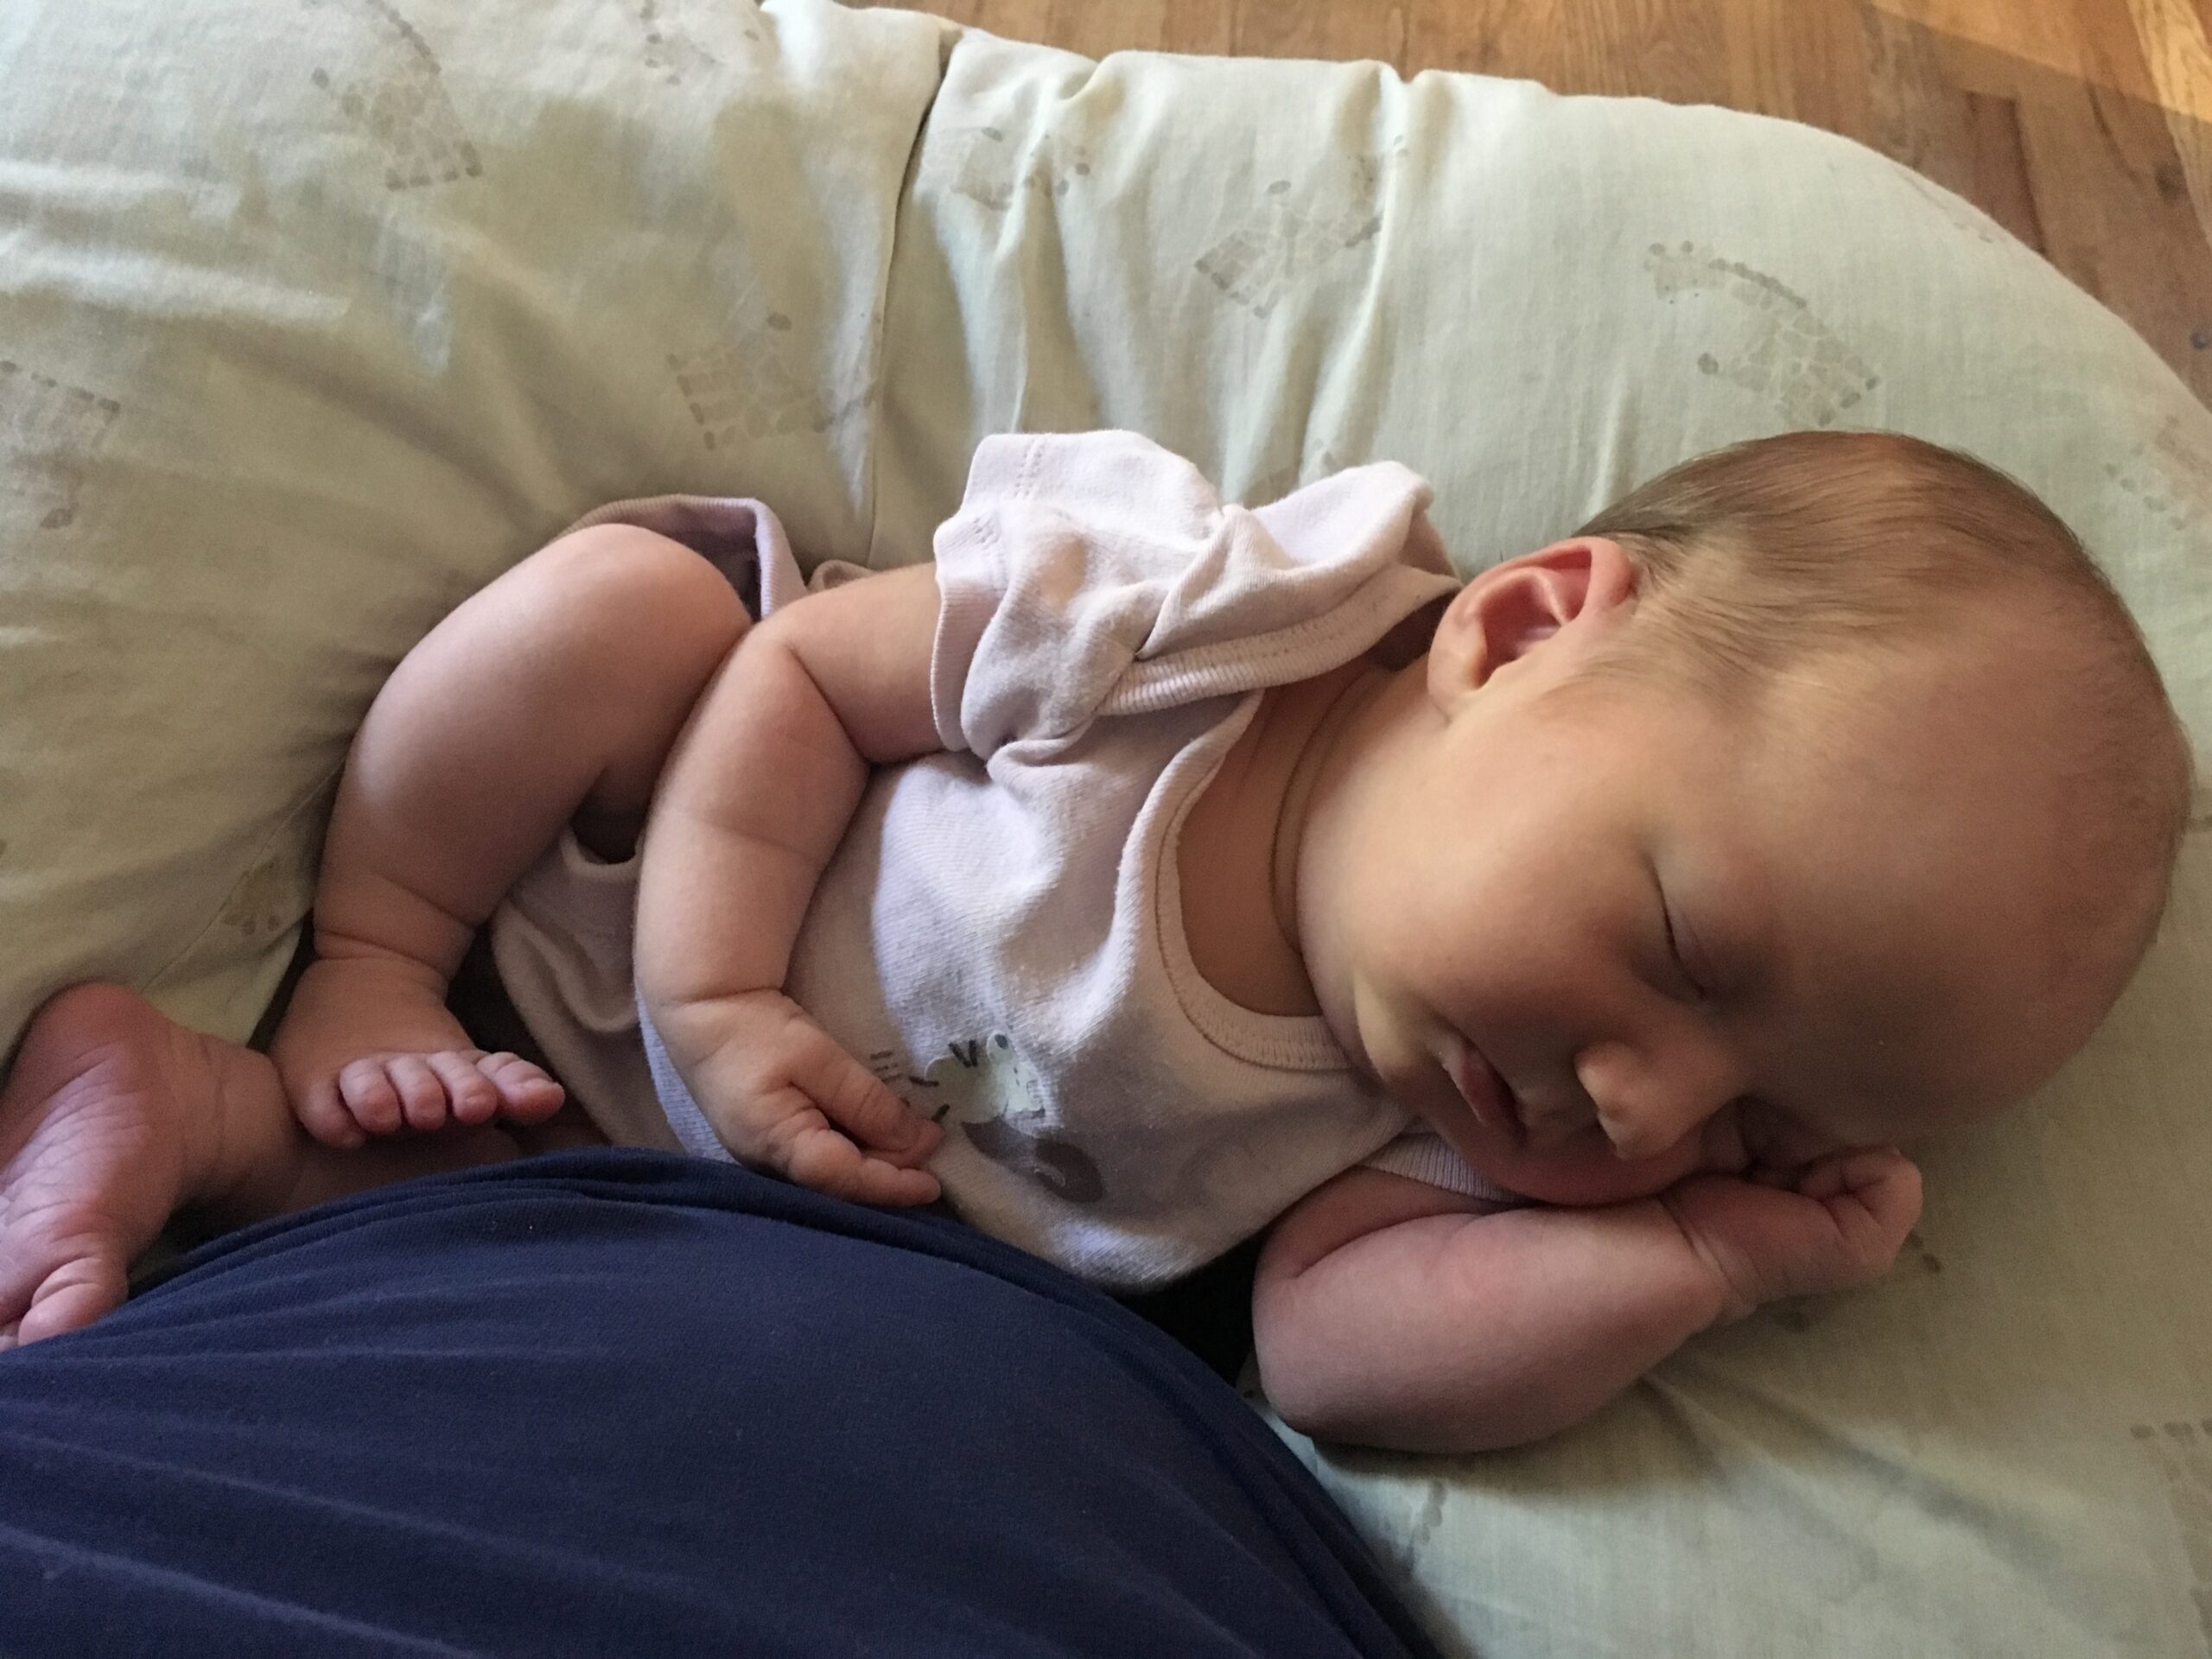 The Way of Perfection via Postpartum Motherhood